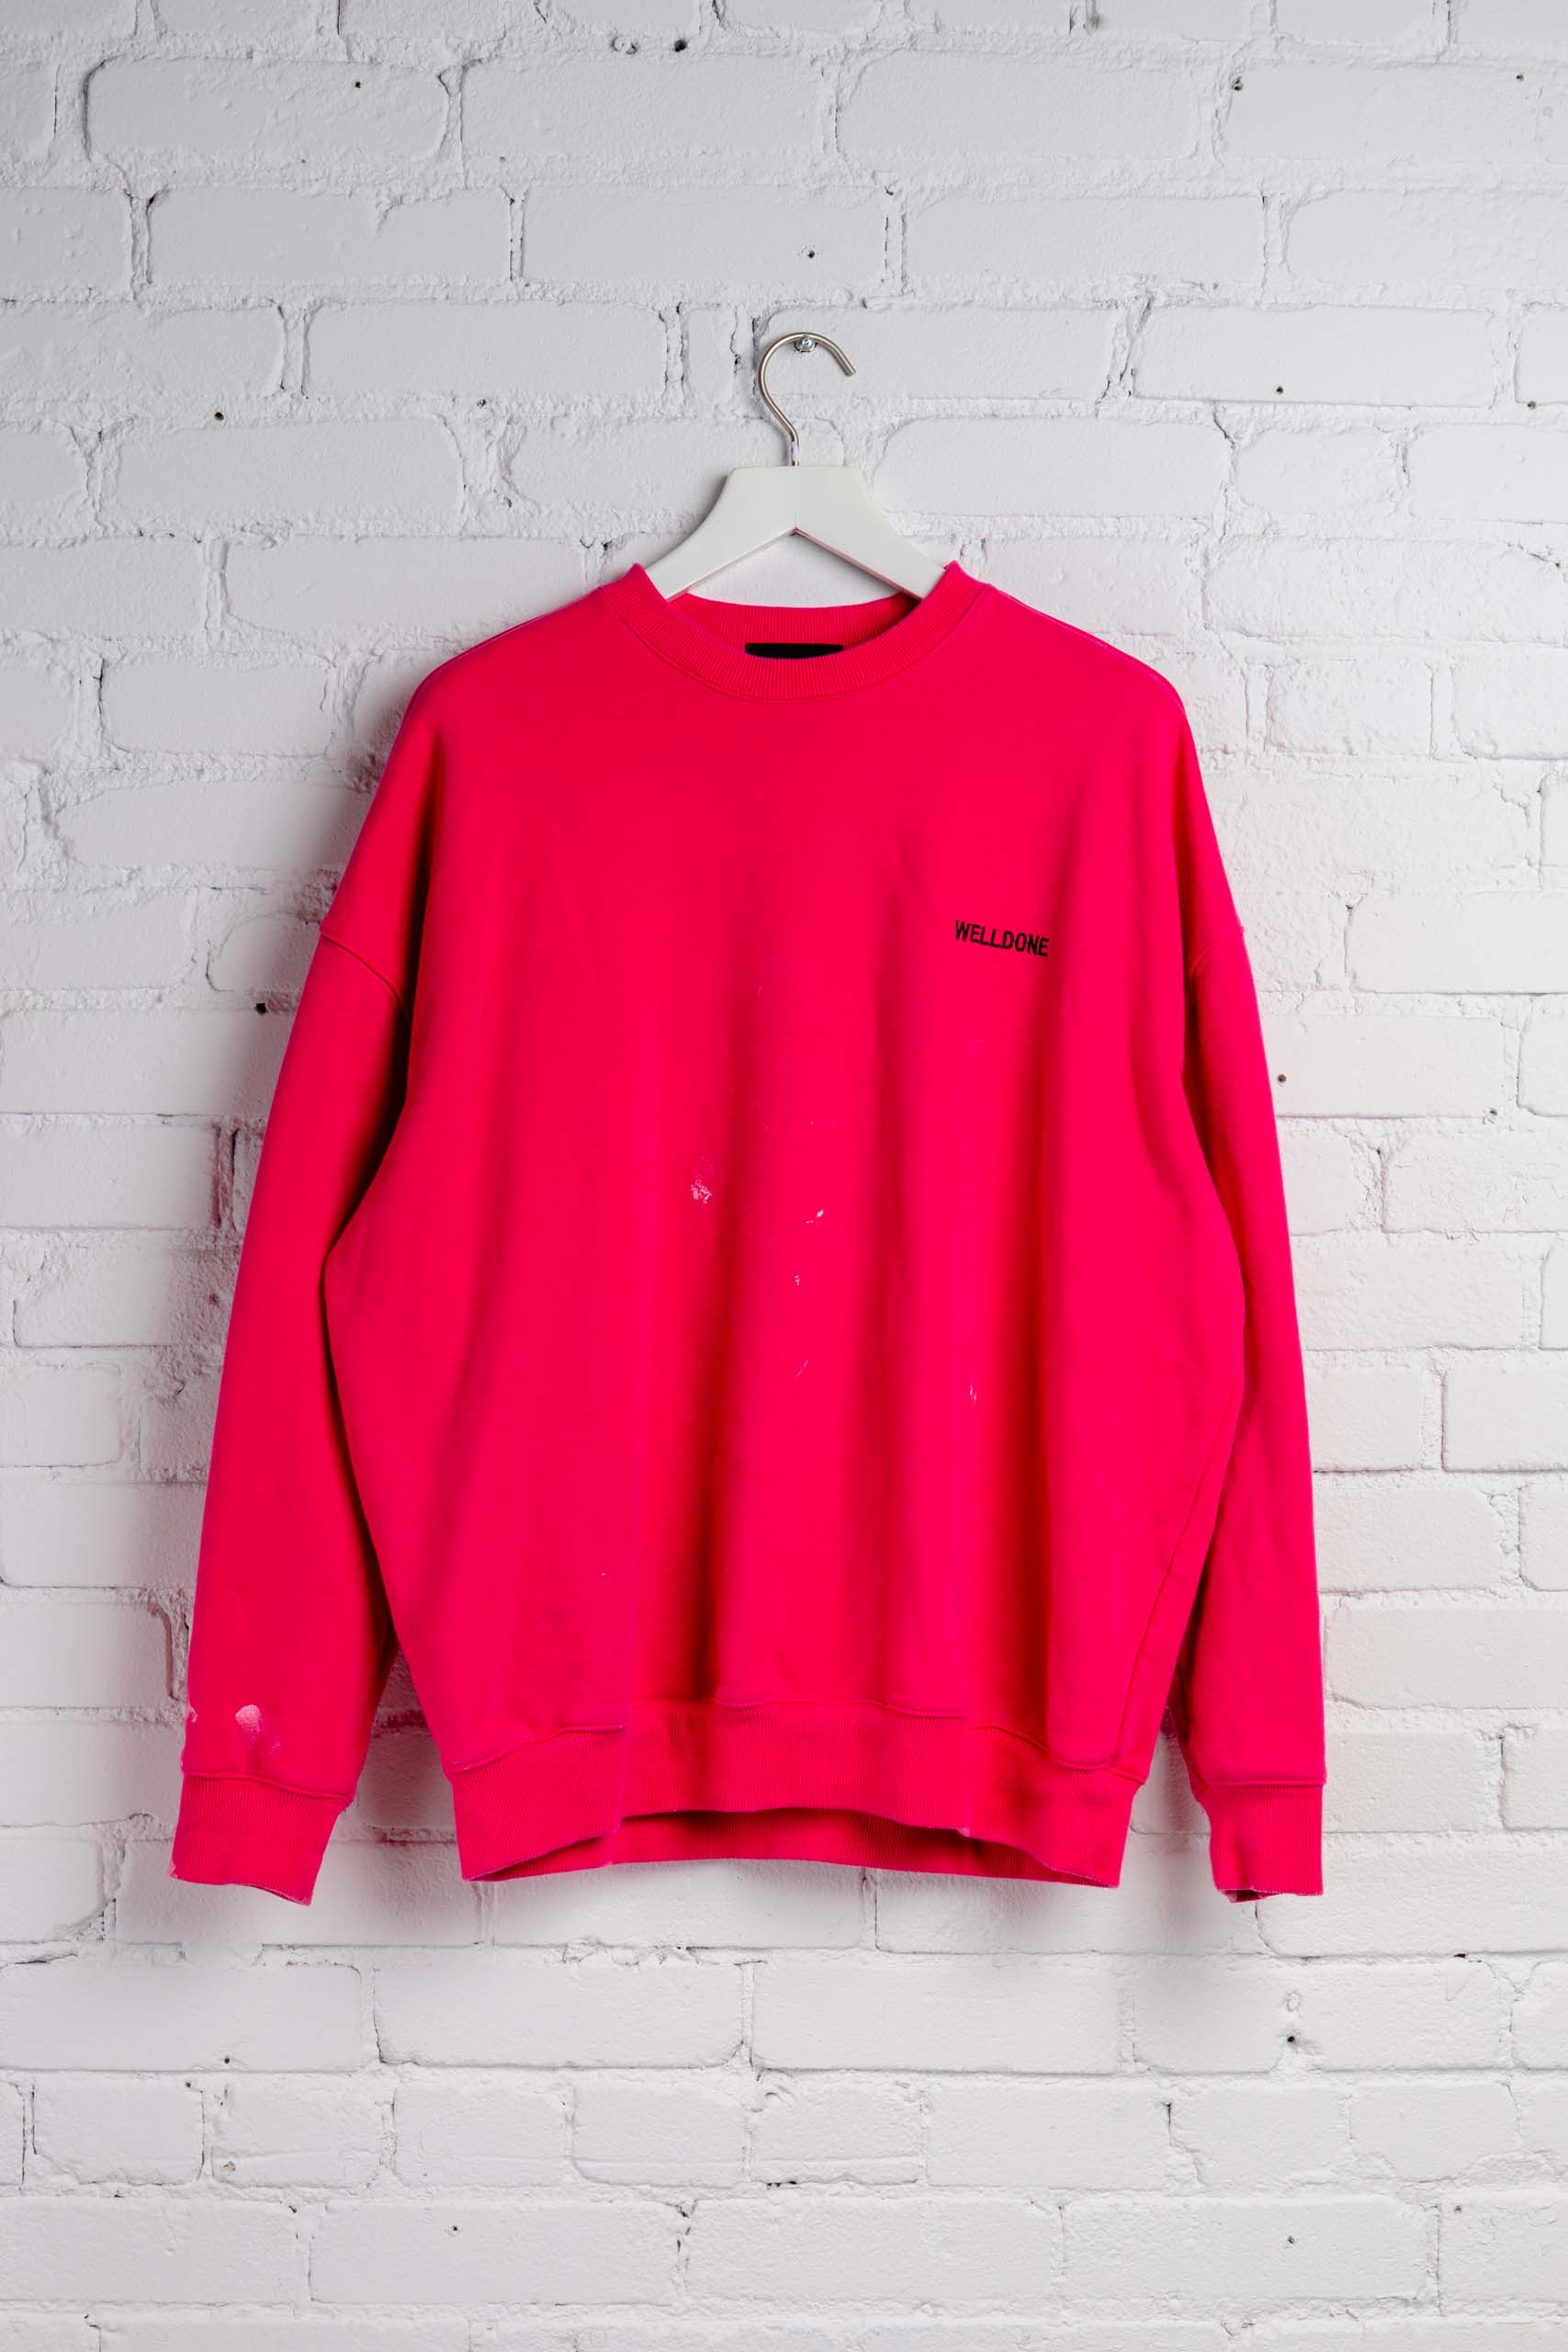 Vintage Pinky Sweatshirt